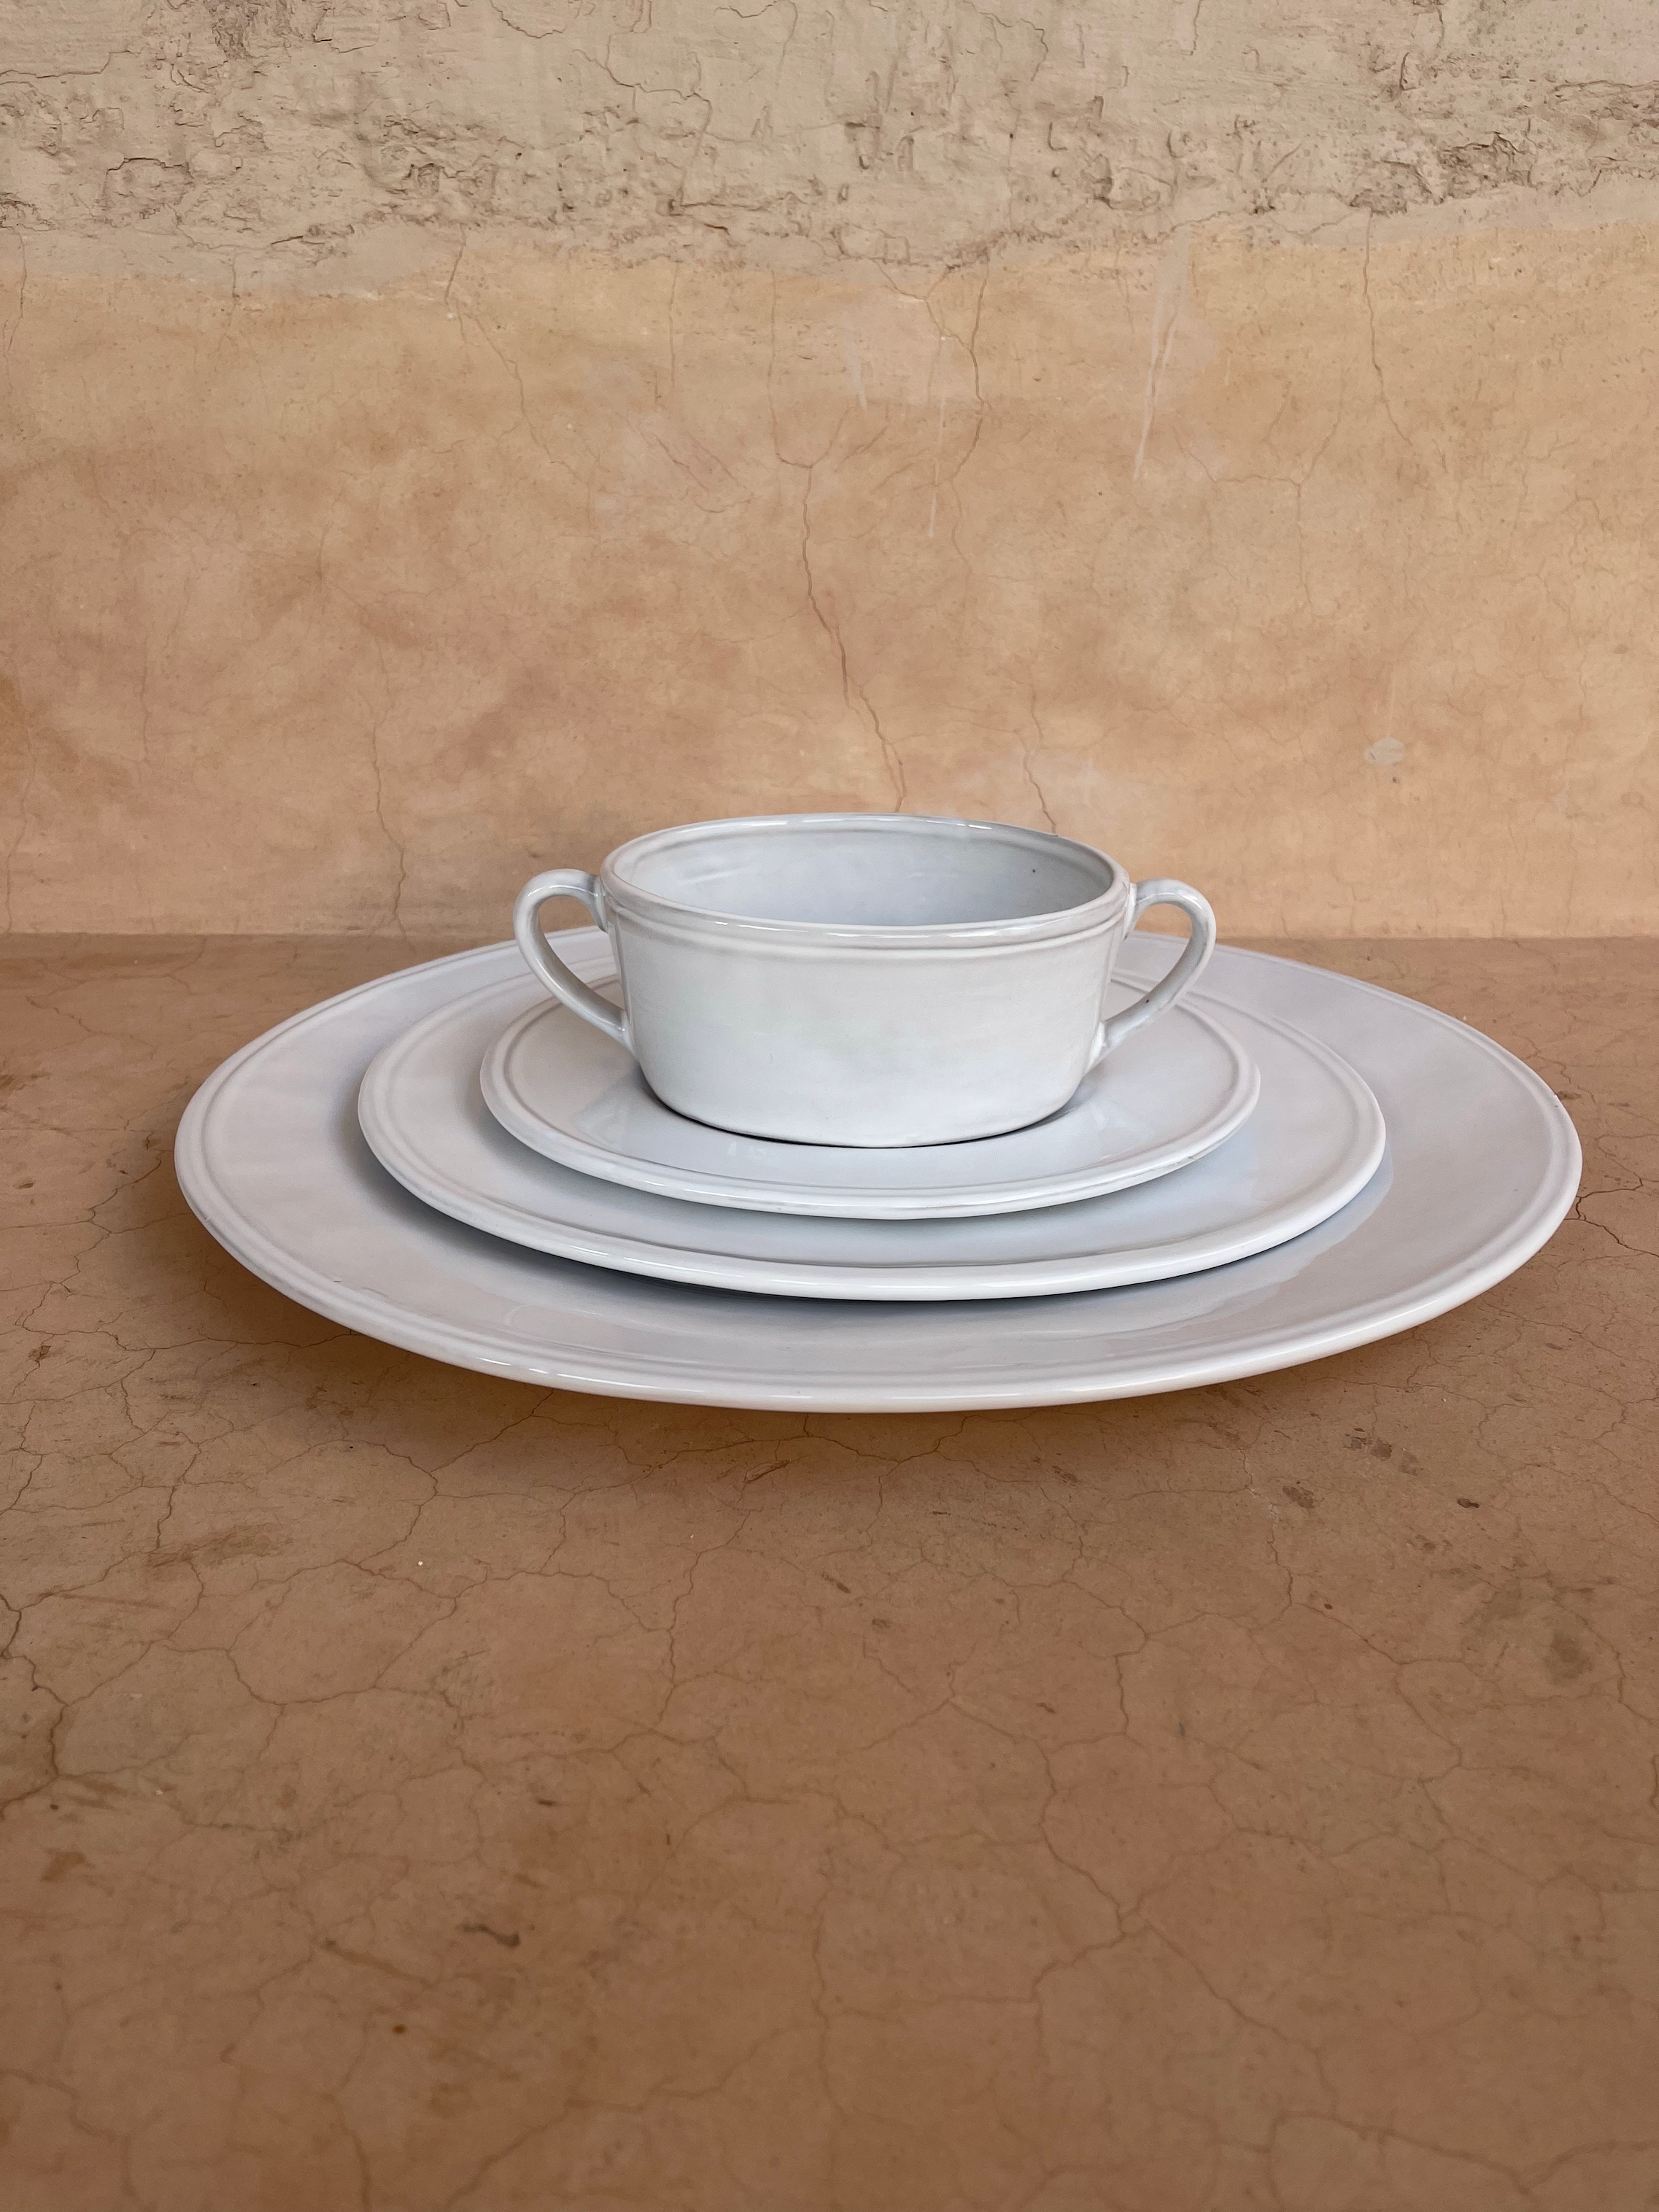 Clos du Manoir Dinner Plate - Plates - Clos du Manoir - Brand_Clos du Manoir - Dinnerware_Bowls & Plates - Kitchen_Serveware - IMG_0850_closdumanoirdinnerware_2bd76c9d-1eb7-462d-8156-0d3906d5ff37